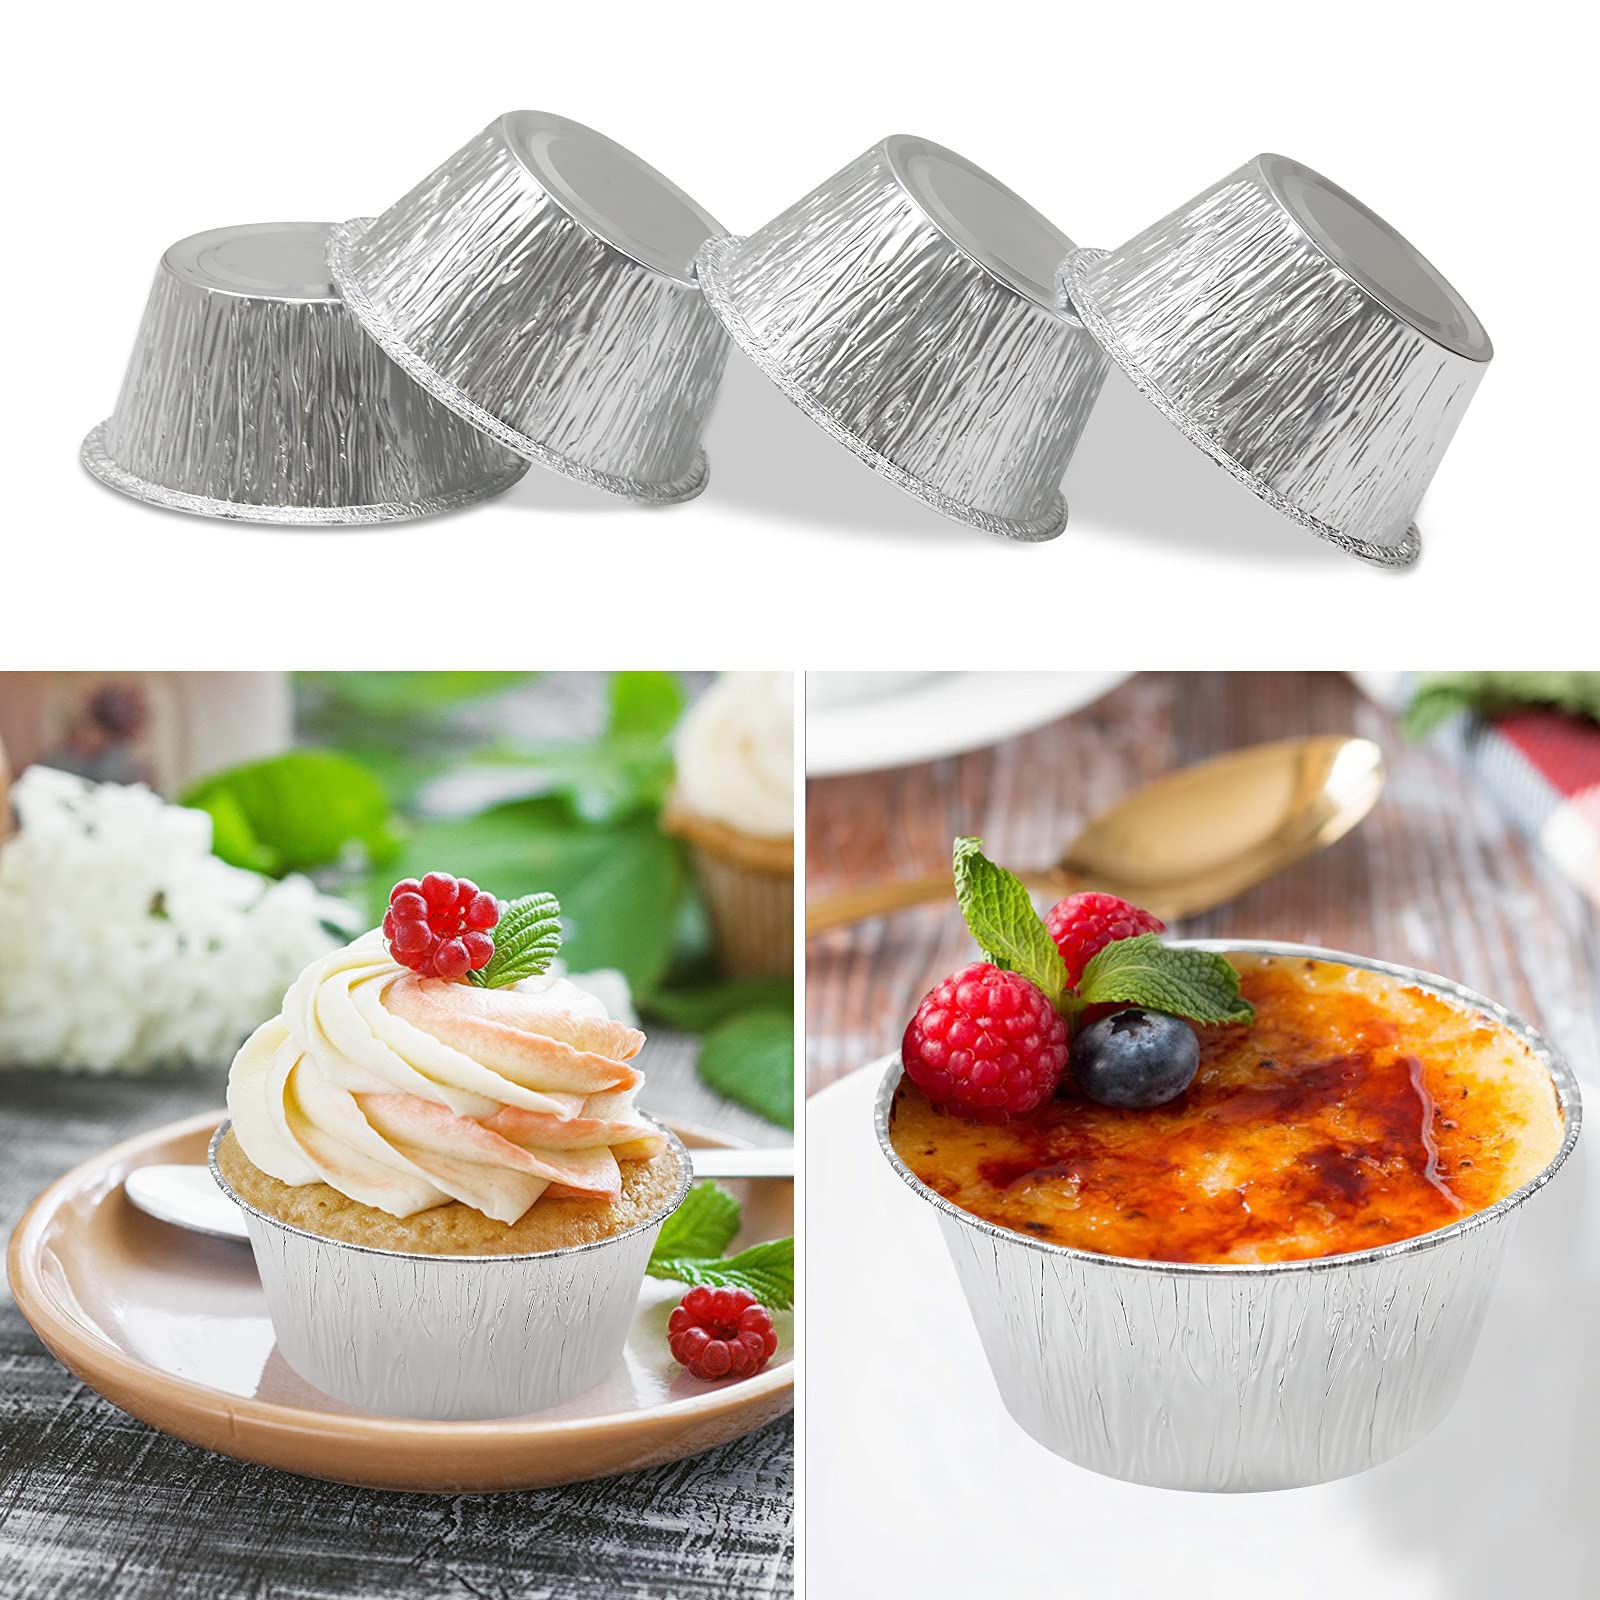 Aluminum Foil Baking Cups, 200 Pack Disposable 4 Oz Ramekins Aluminum Cupcake Muffin Liners Silver Foil Baking Cups for Cupcake, Muffin, Creme Brulee, Egg Tart, Souffle, Pudding